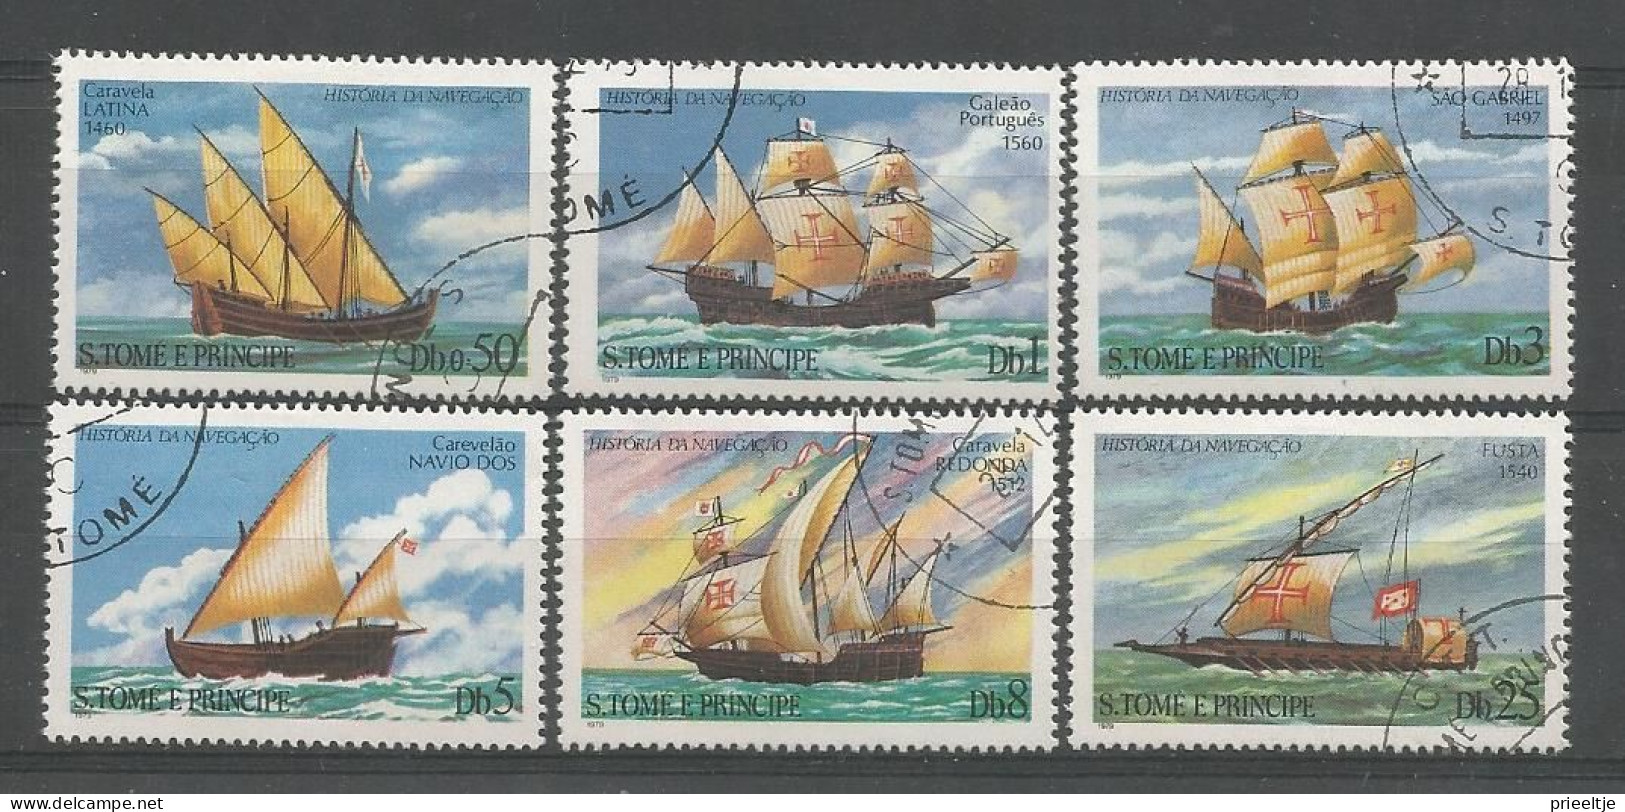 St Tome E Principe 1980 Sailing Ships Y.T. 566/571 (0) - Sao Tome And Principe